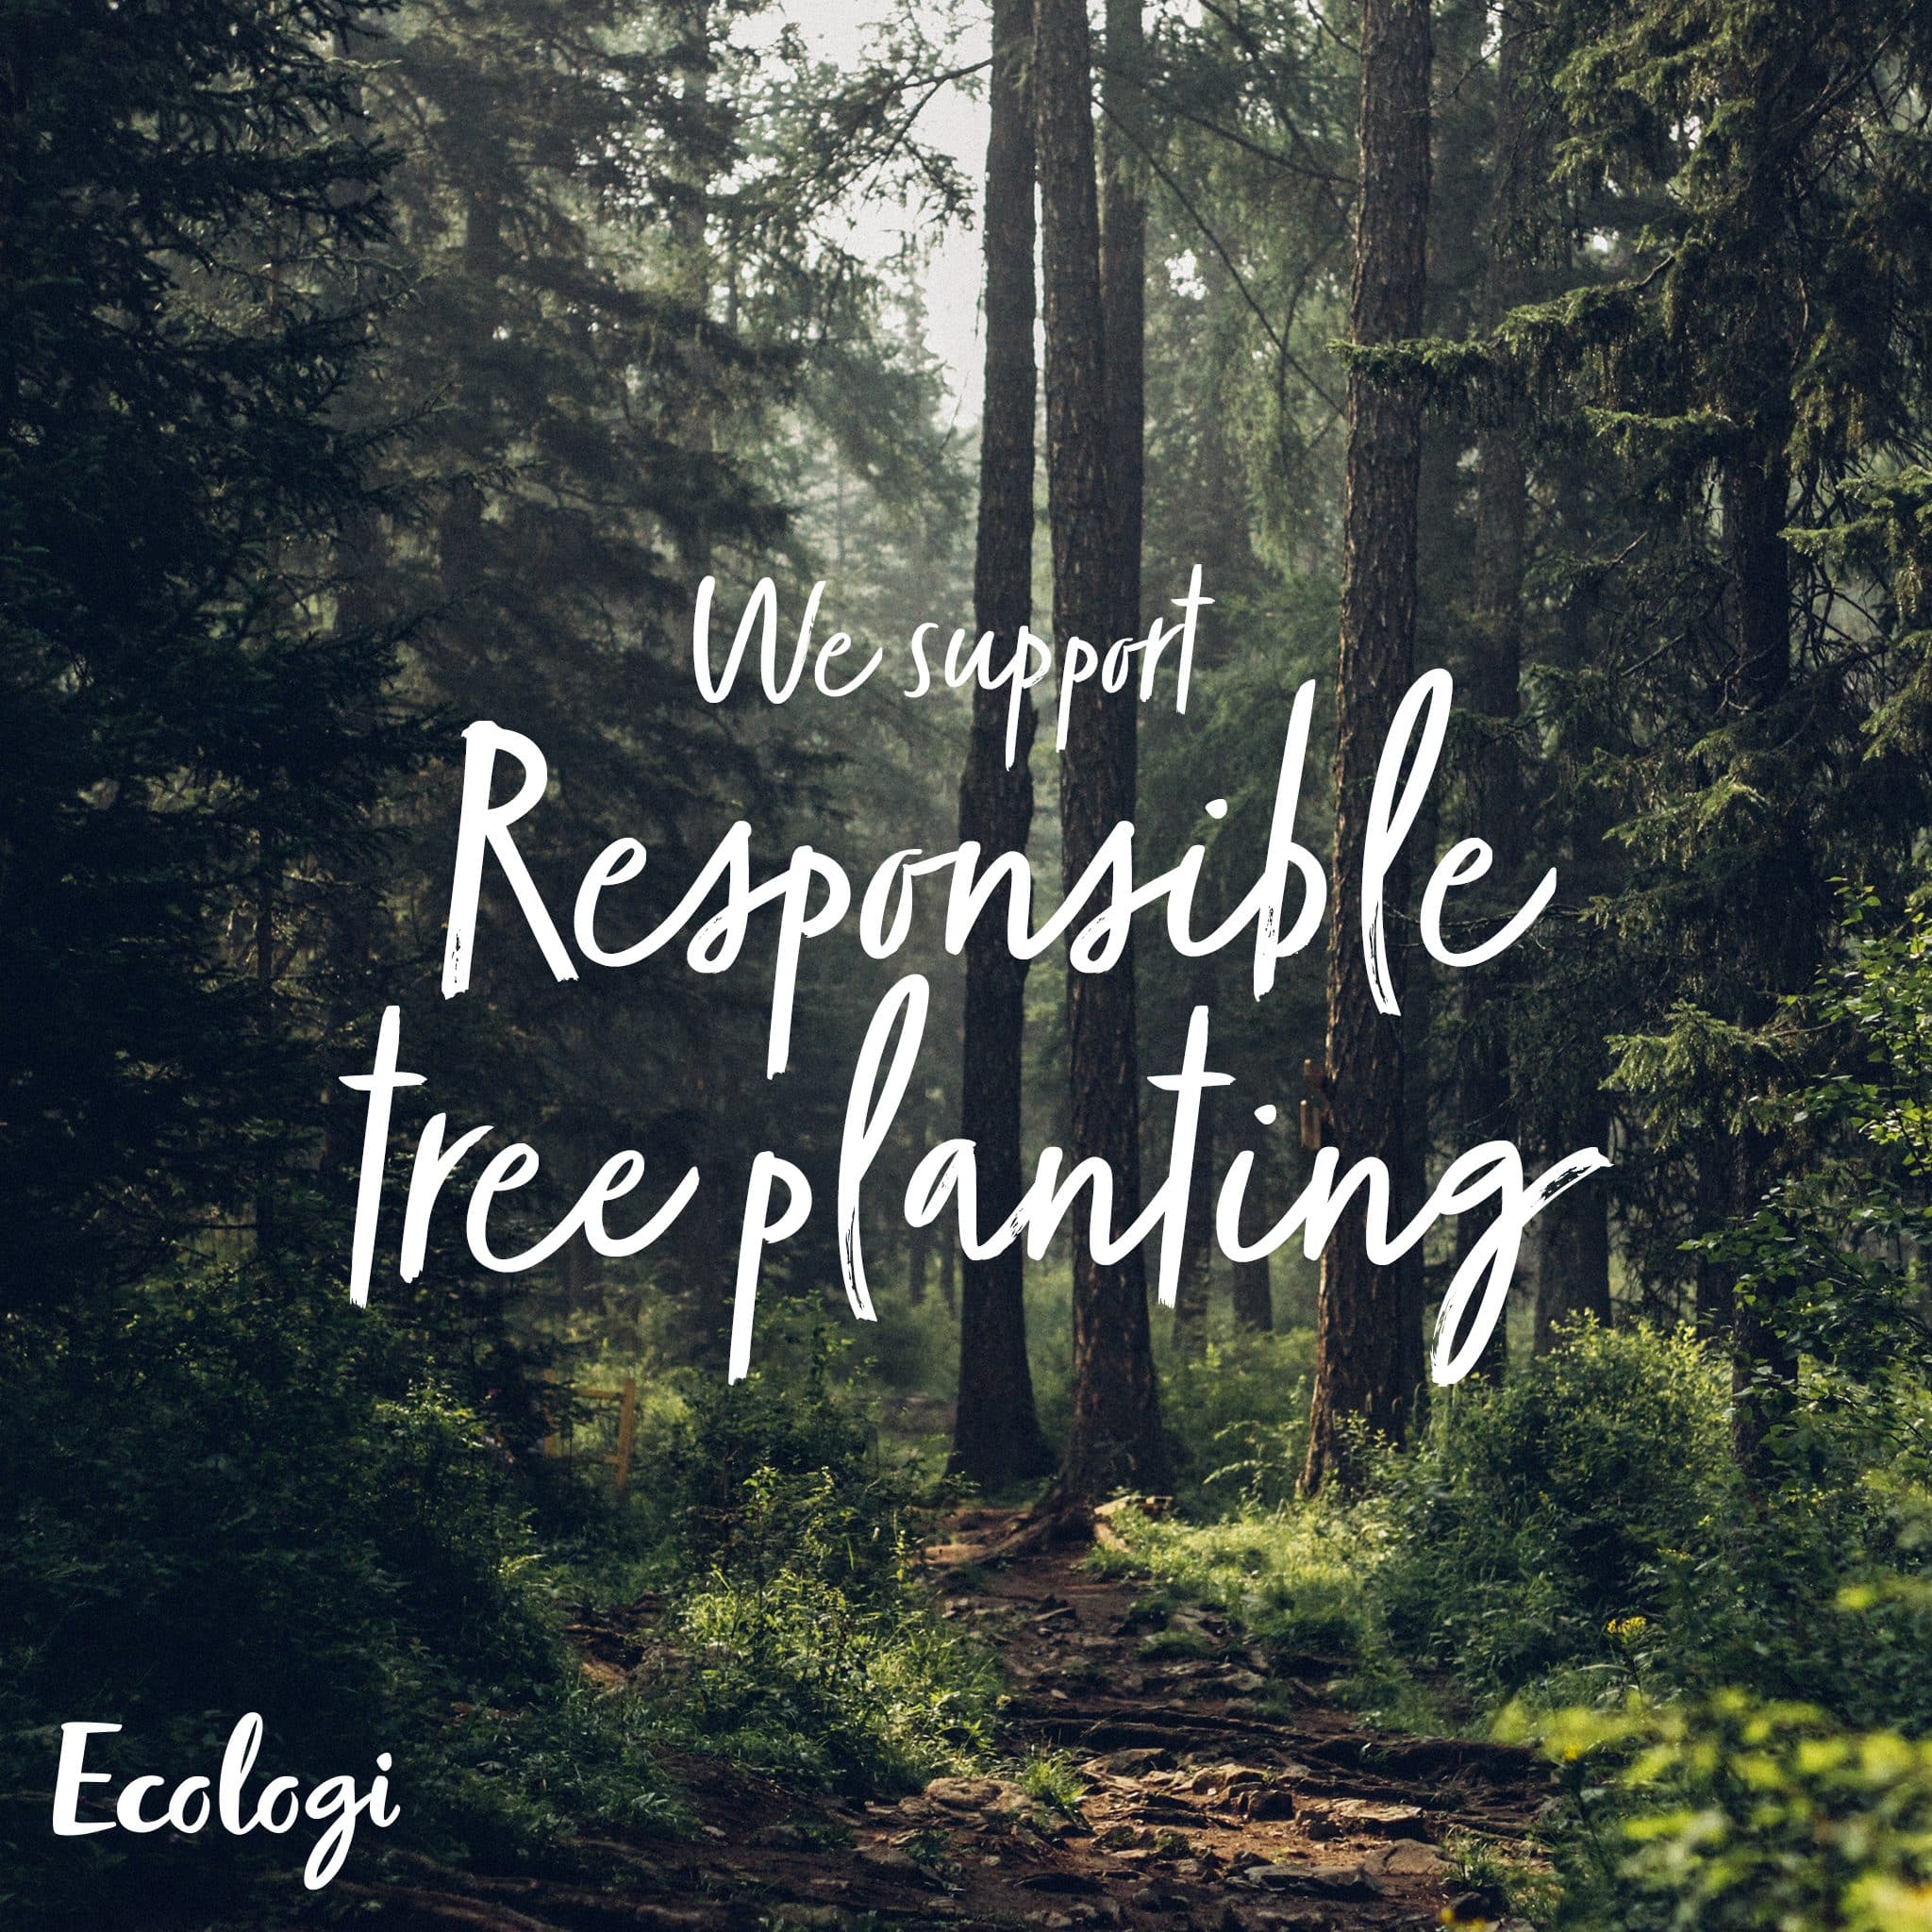 Responsible tree planting with Ecologi.